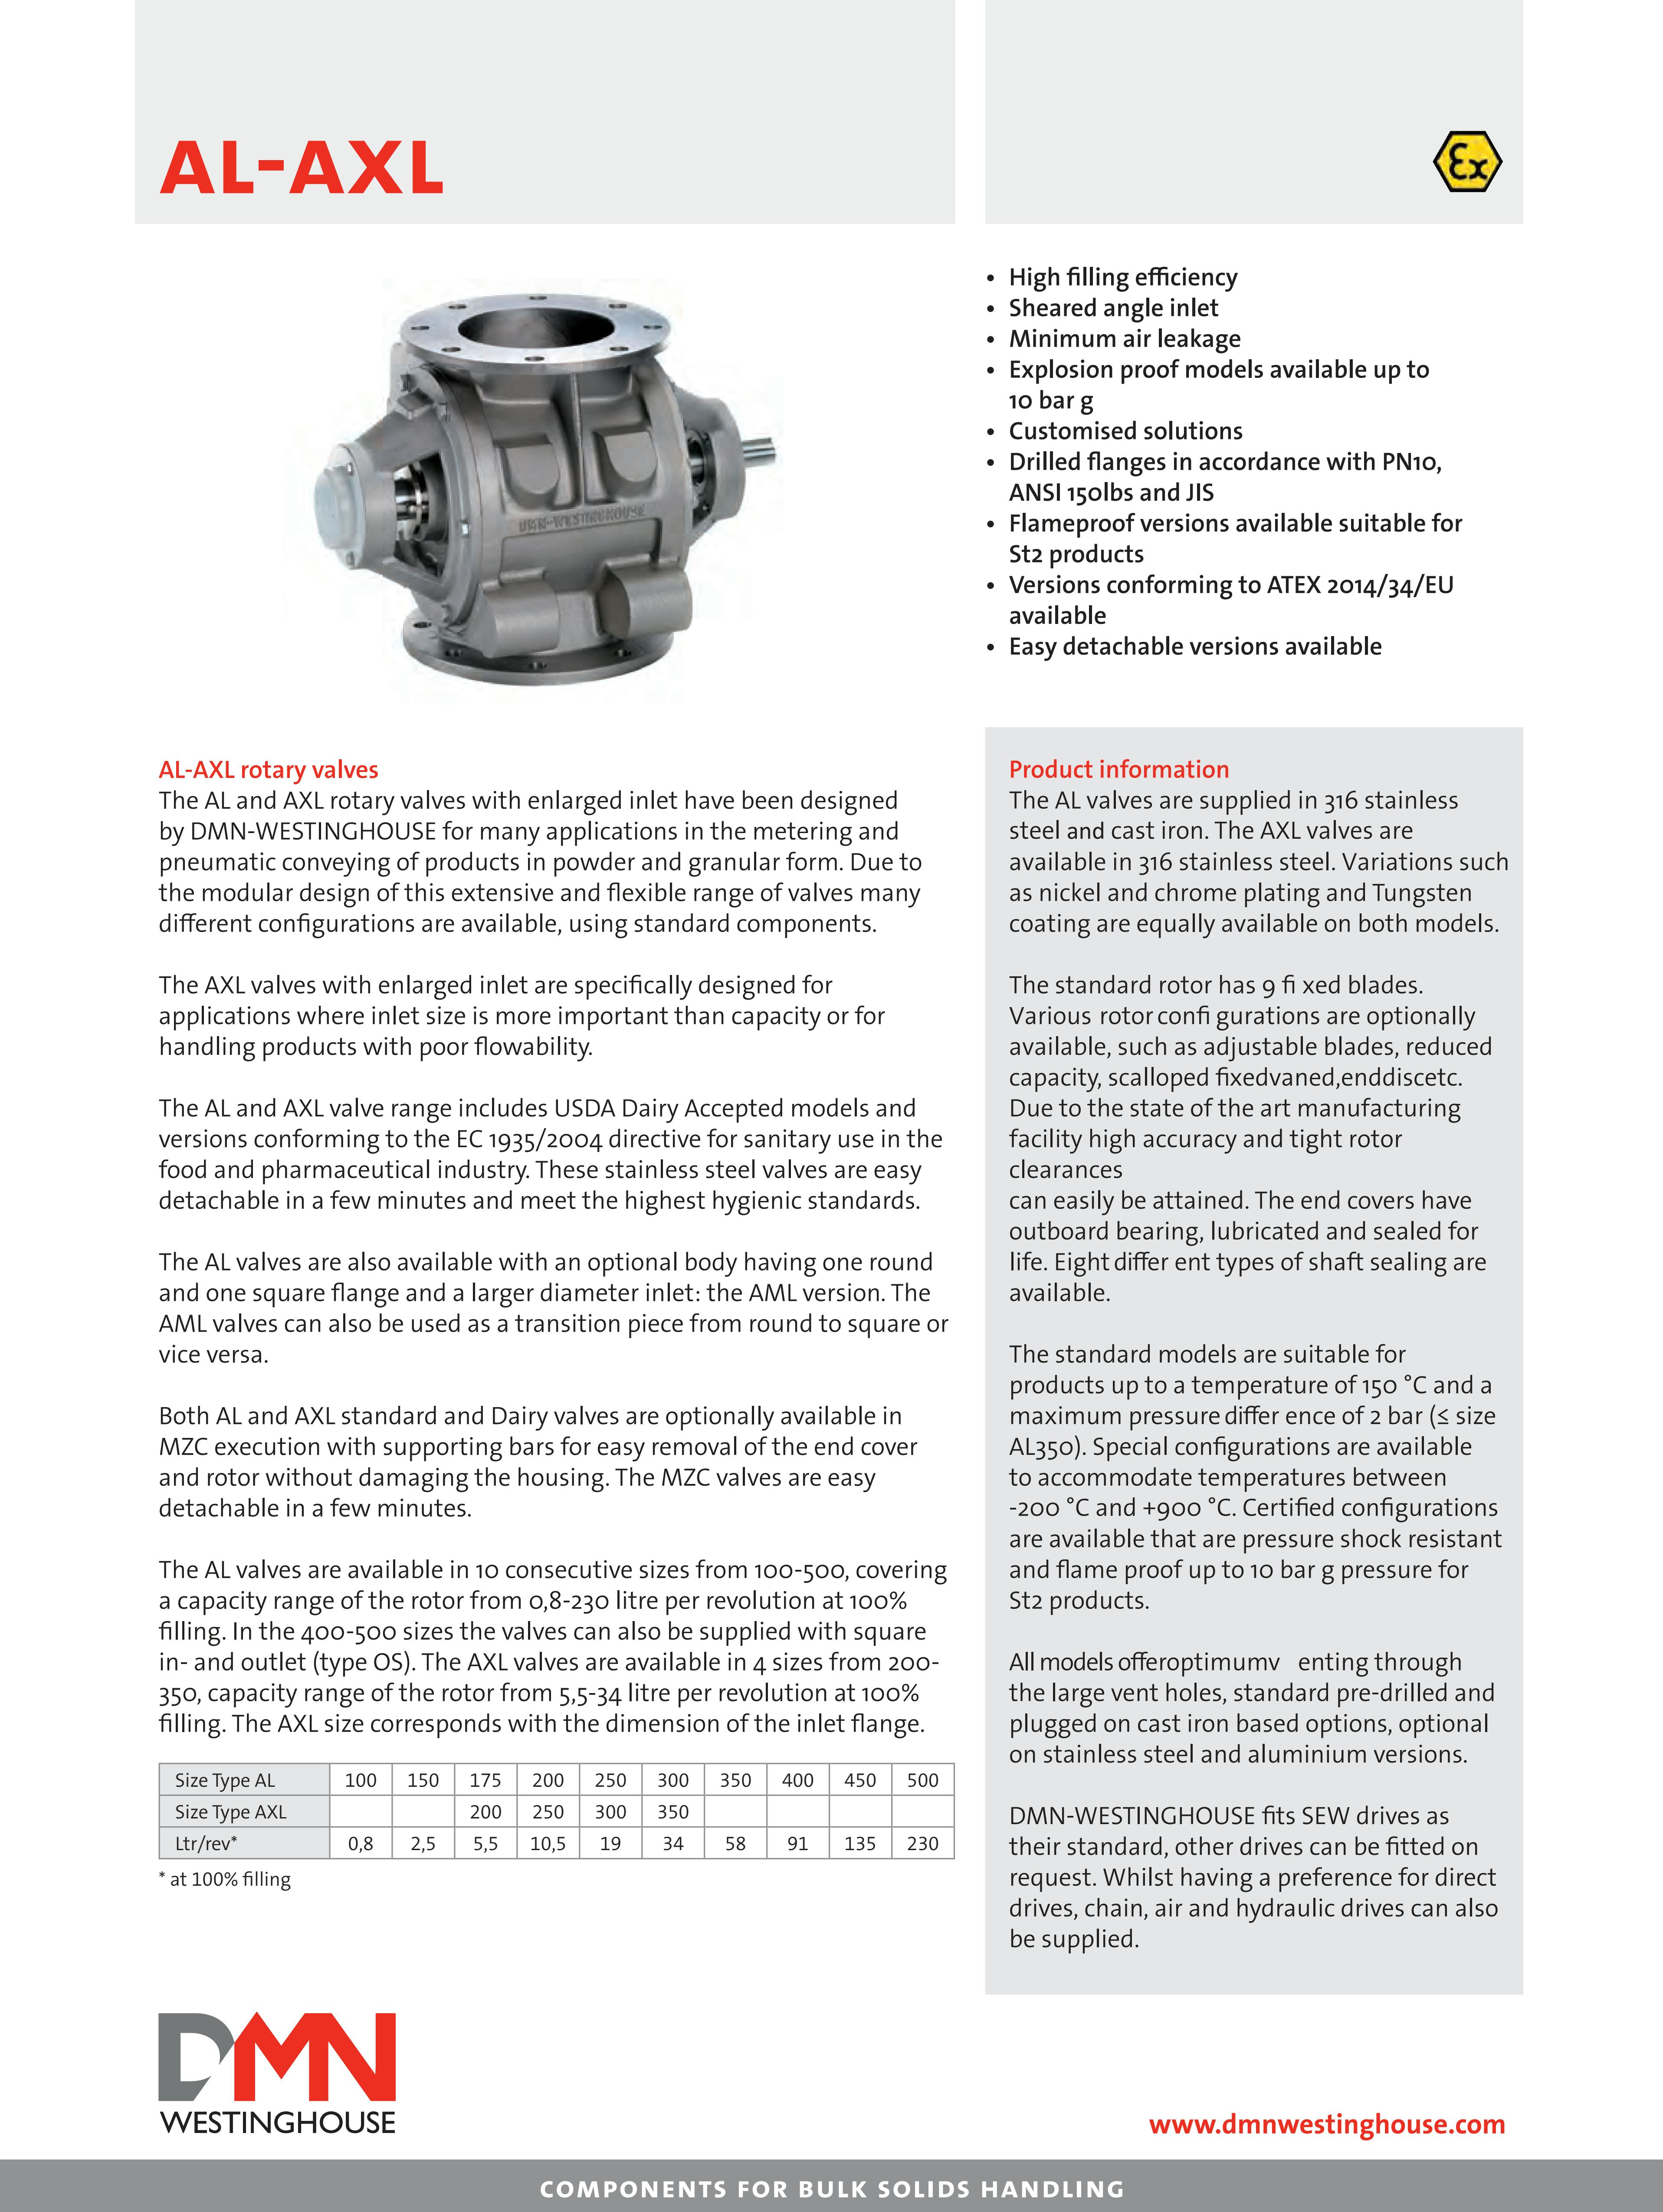 DMN Westinghouse AL-175-3N - Rotating valve - image 11